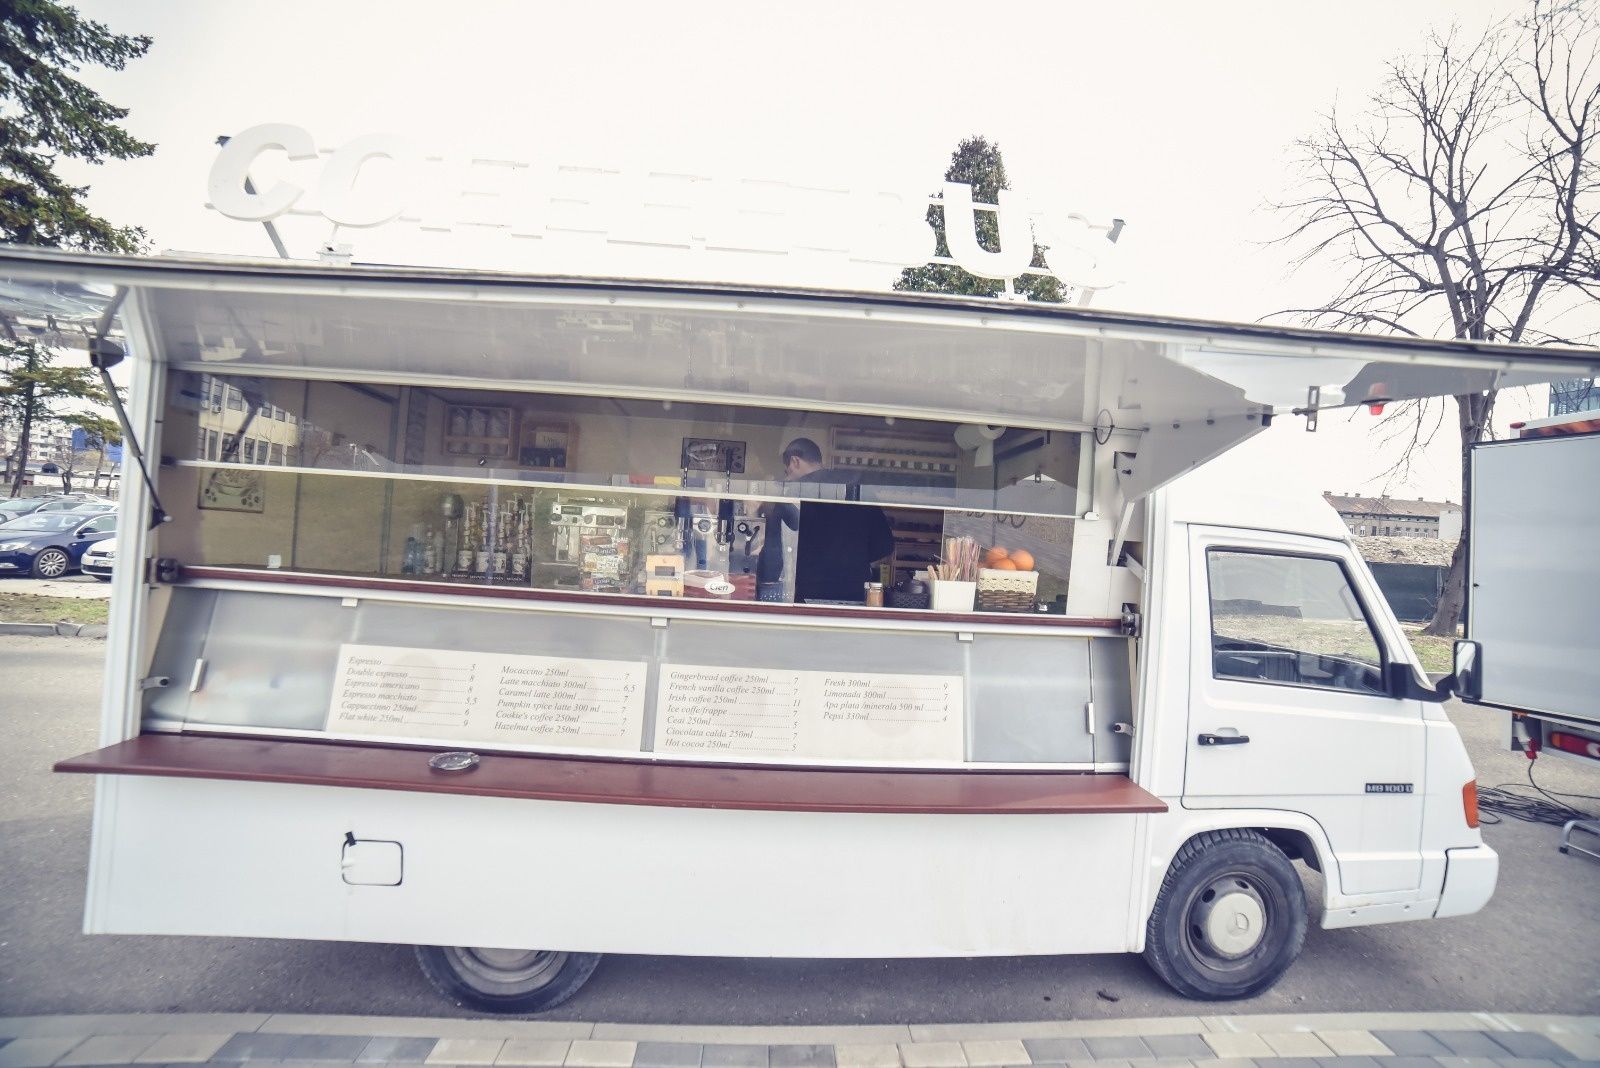 Coffee bus/Food Truck